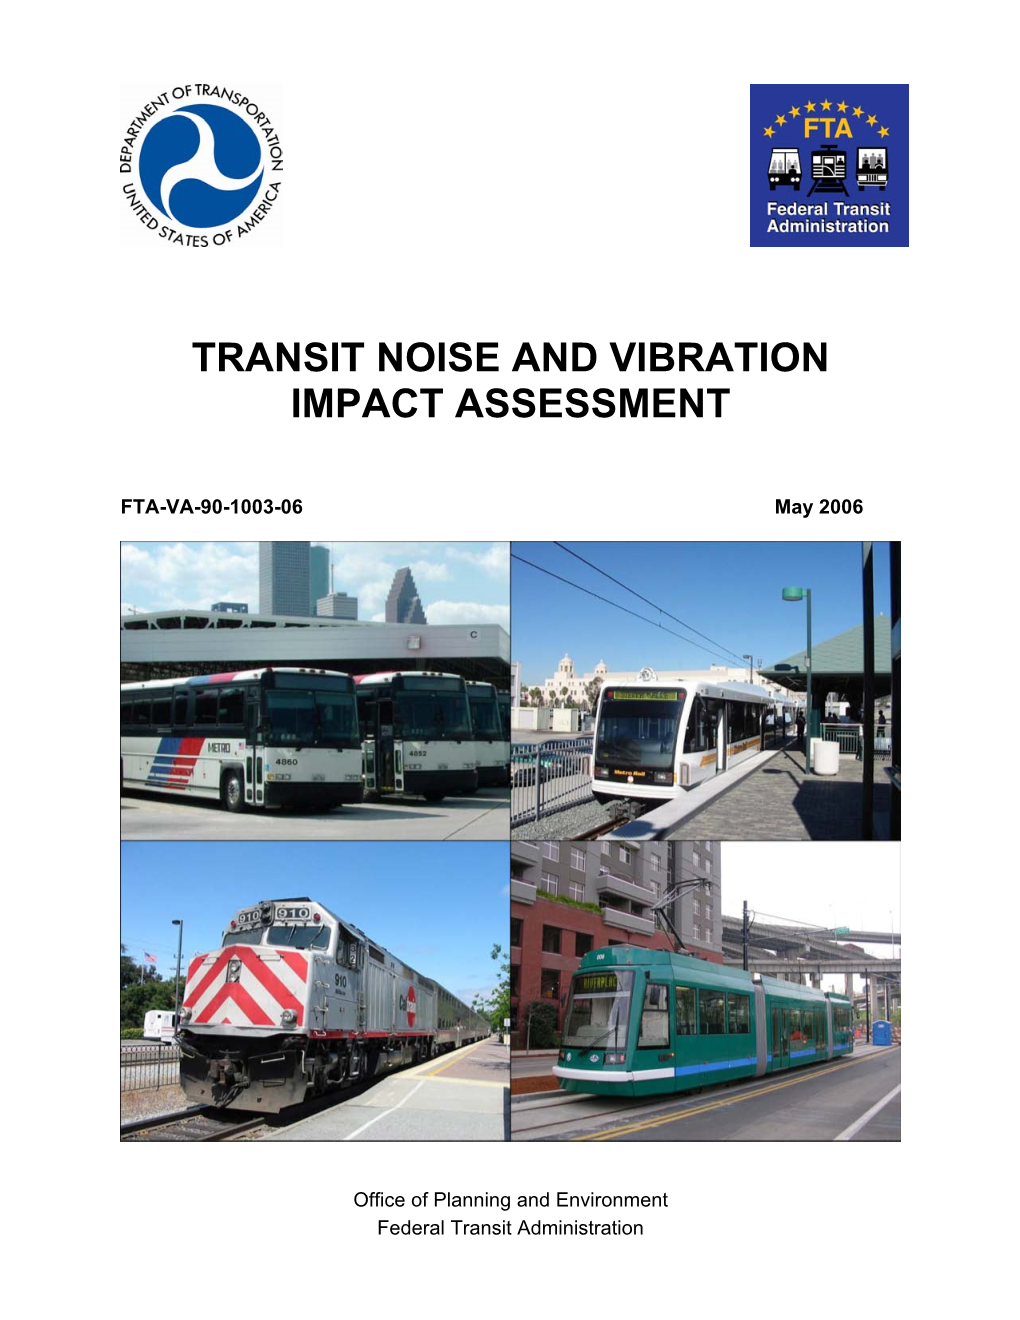 Transit Noise and Vibration Impact Assessment